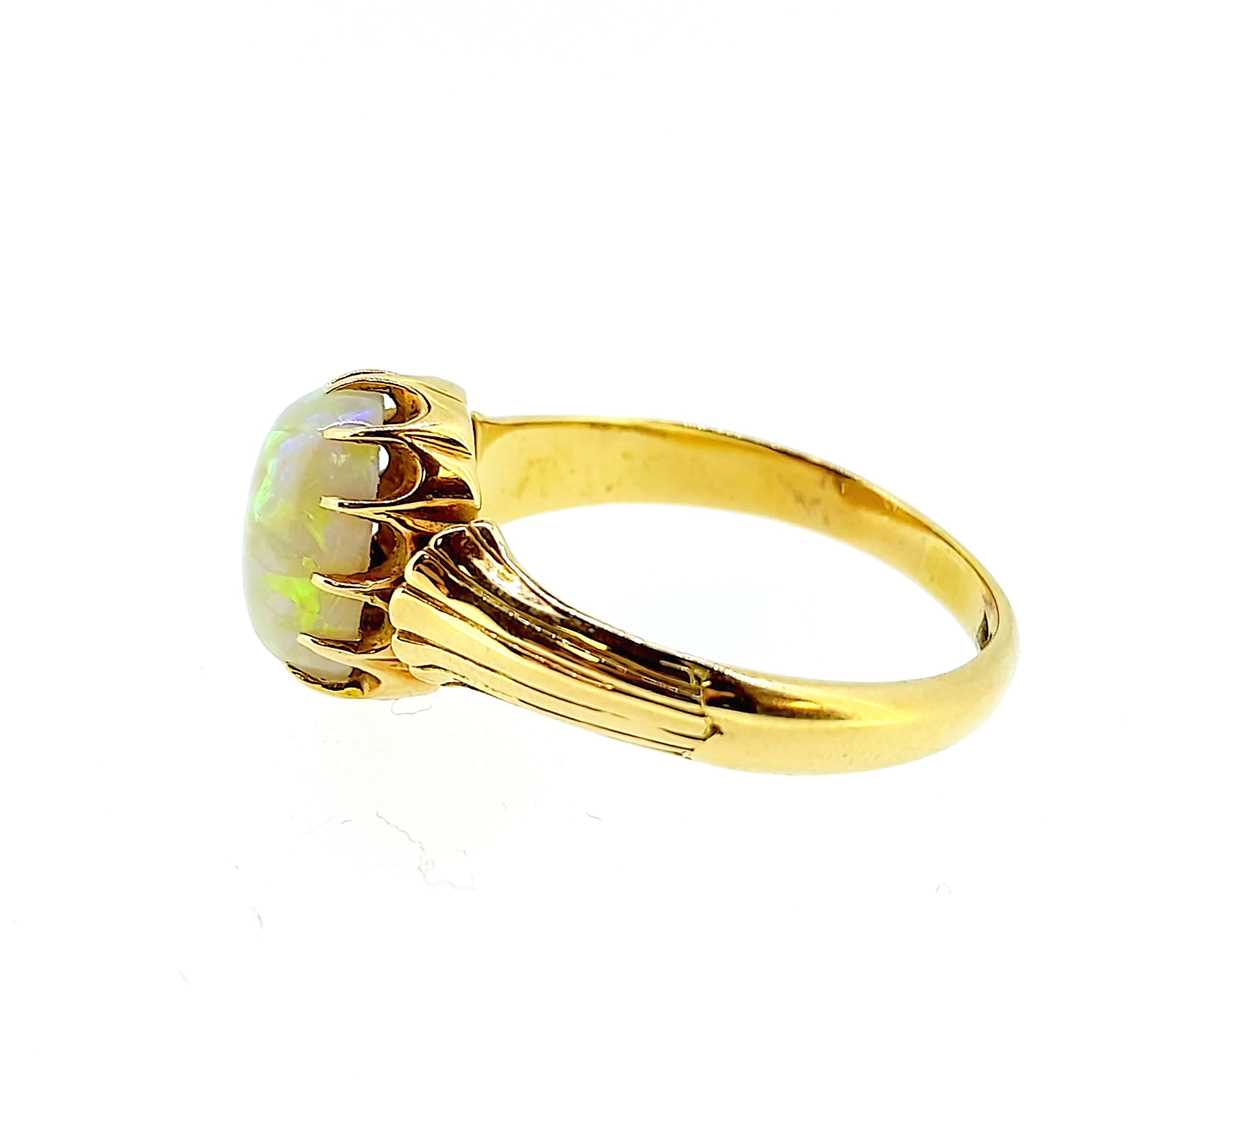 A single stone opal dress ring, - Image 3 of 4